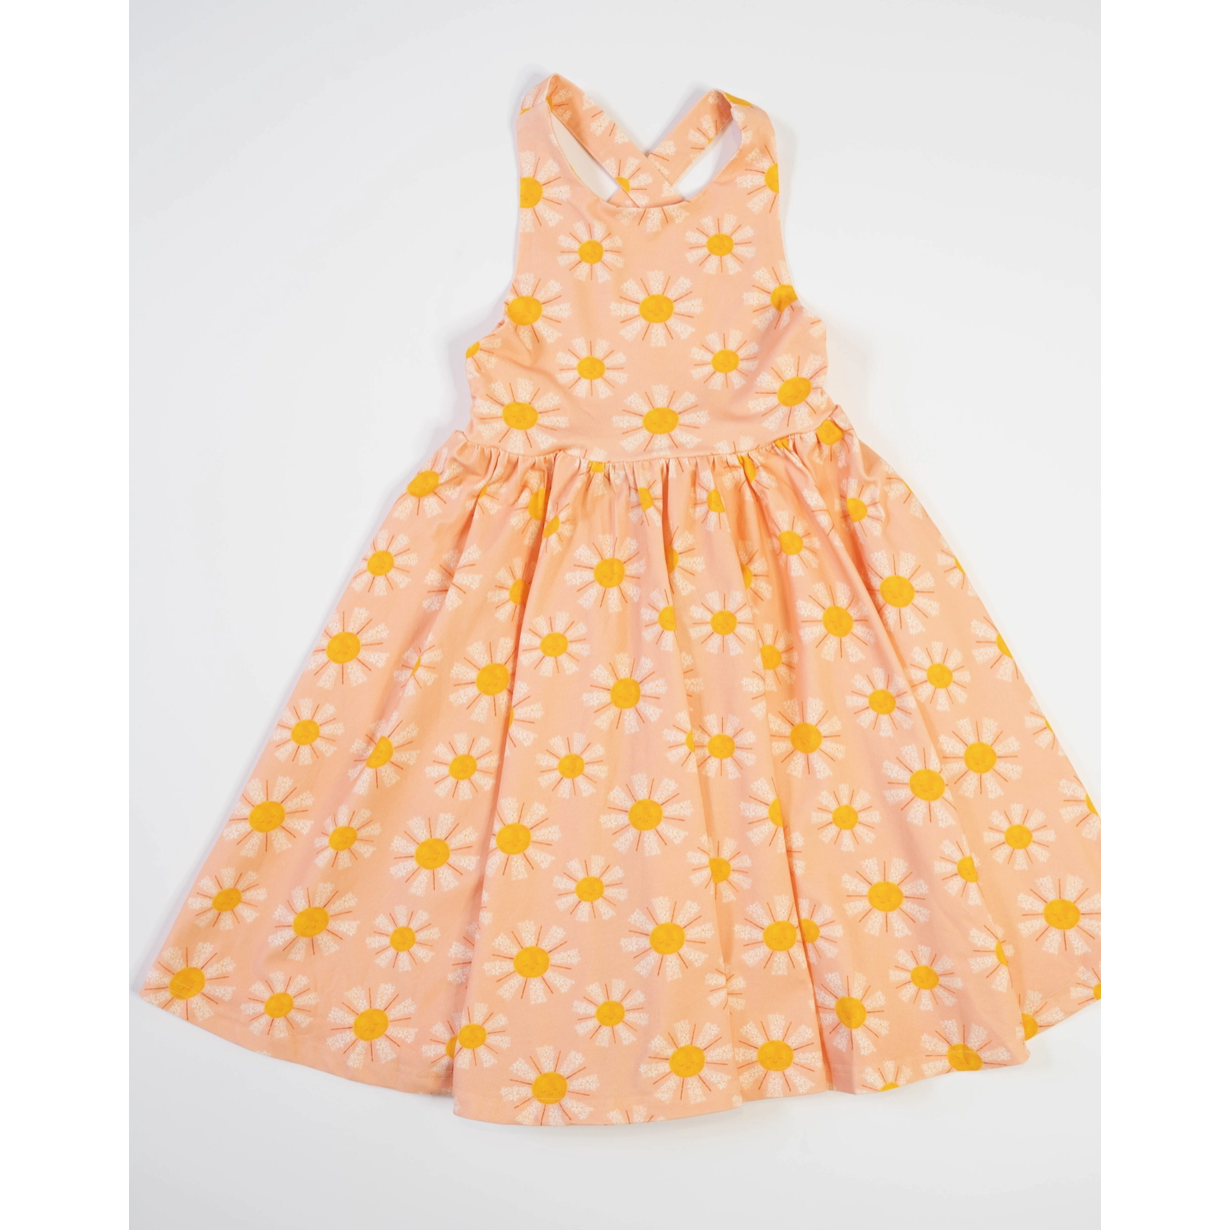 sofia dress | blooming sunshine